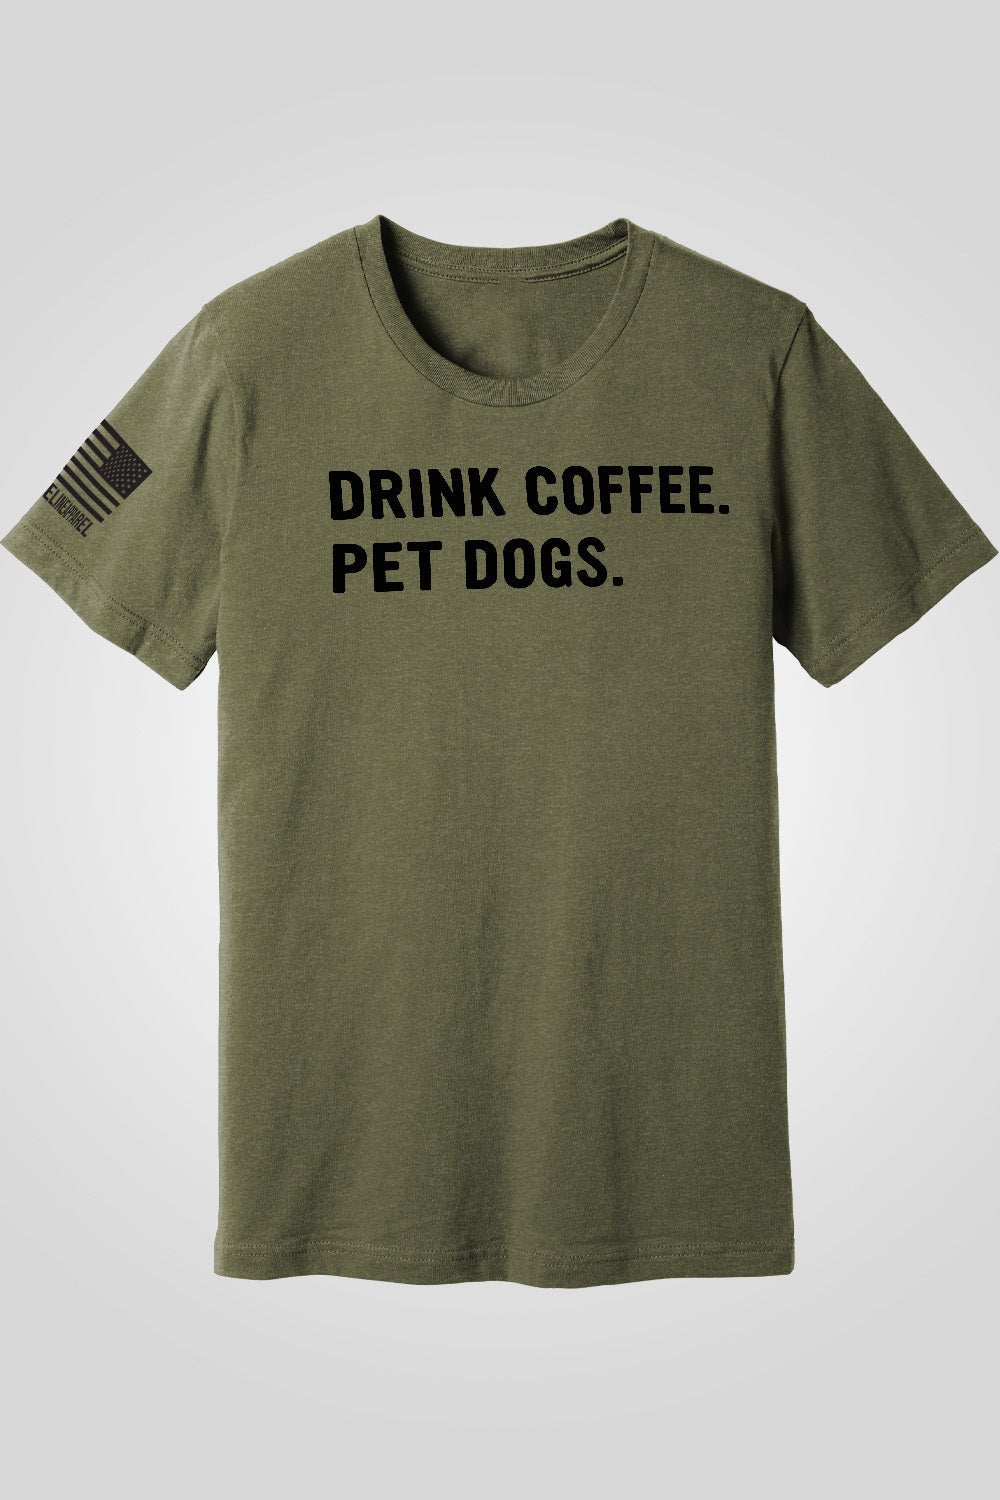 Premium Men's T-Shirt - Drink Coffee Pet Dogs - Nine Line Apparel